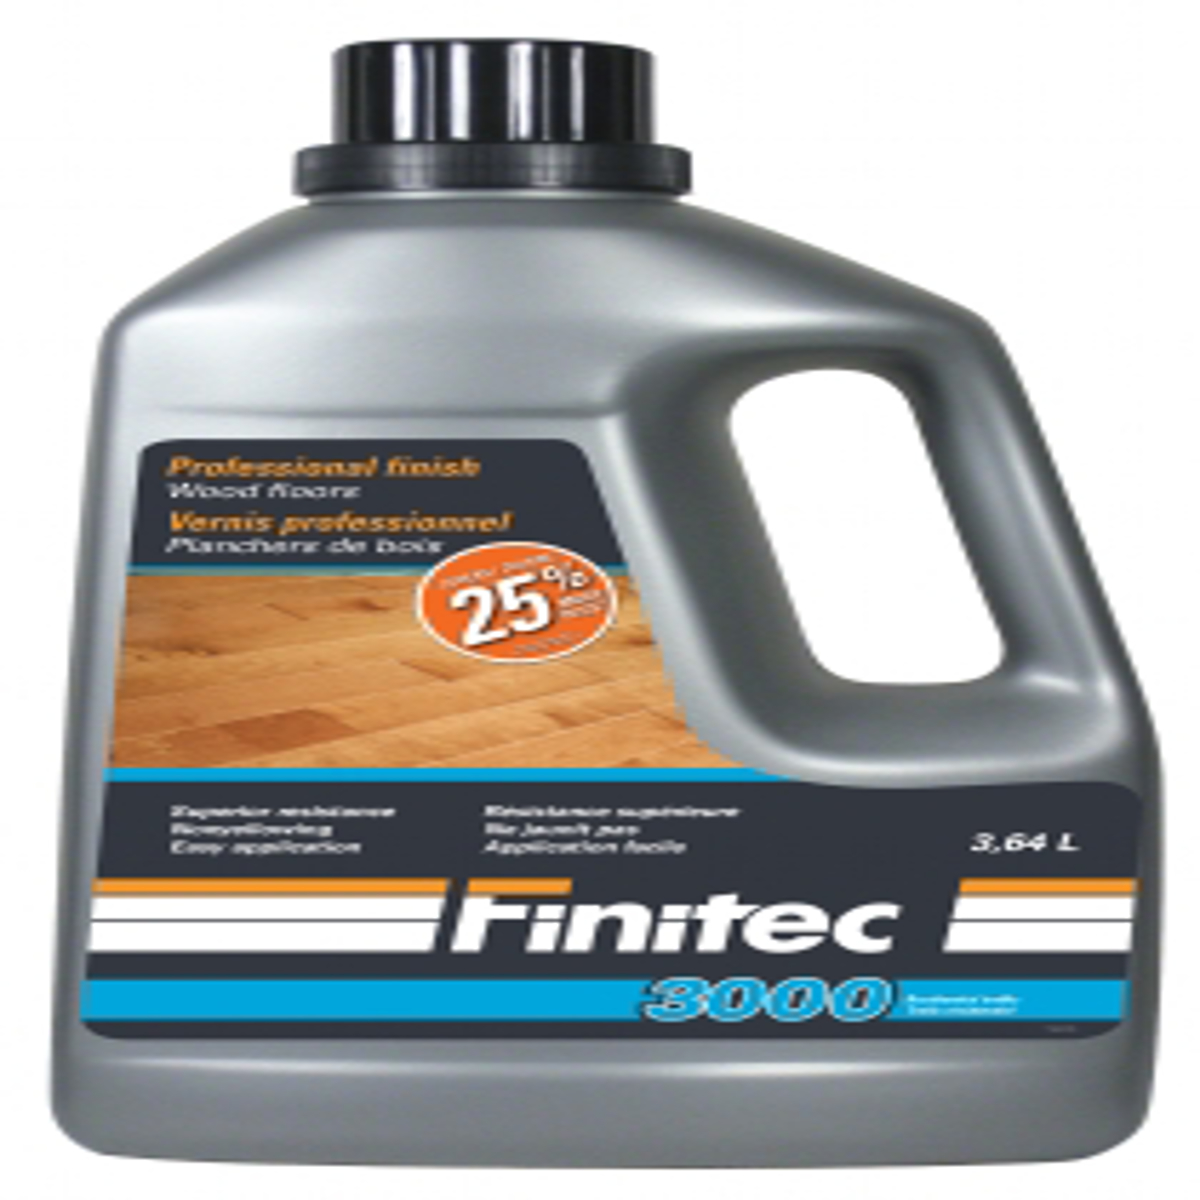 dye FINITEC 3000 FINISH SATIN 3.64 L